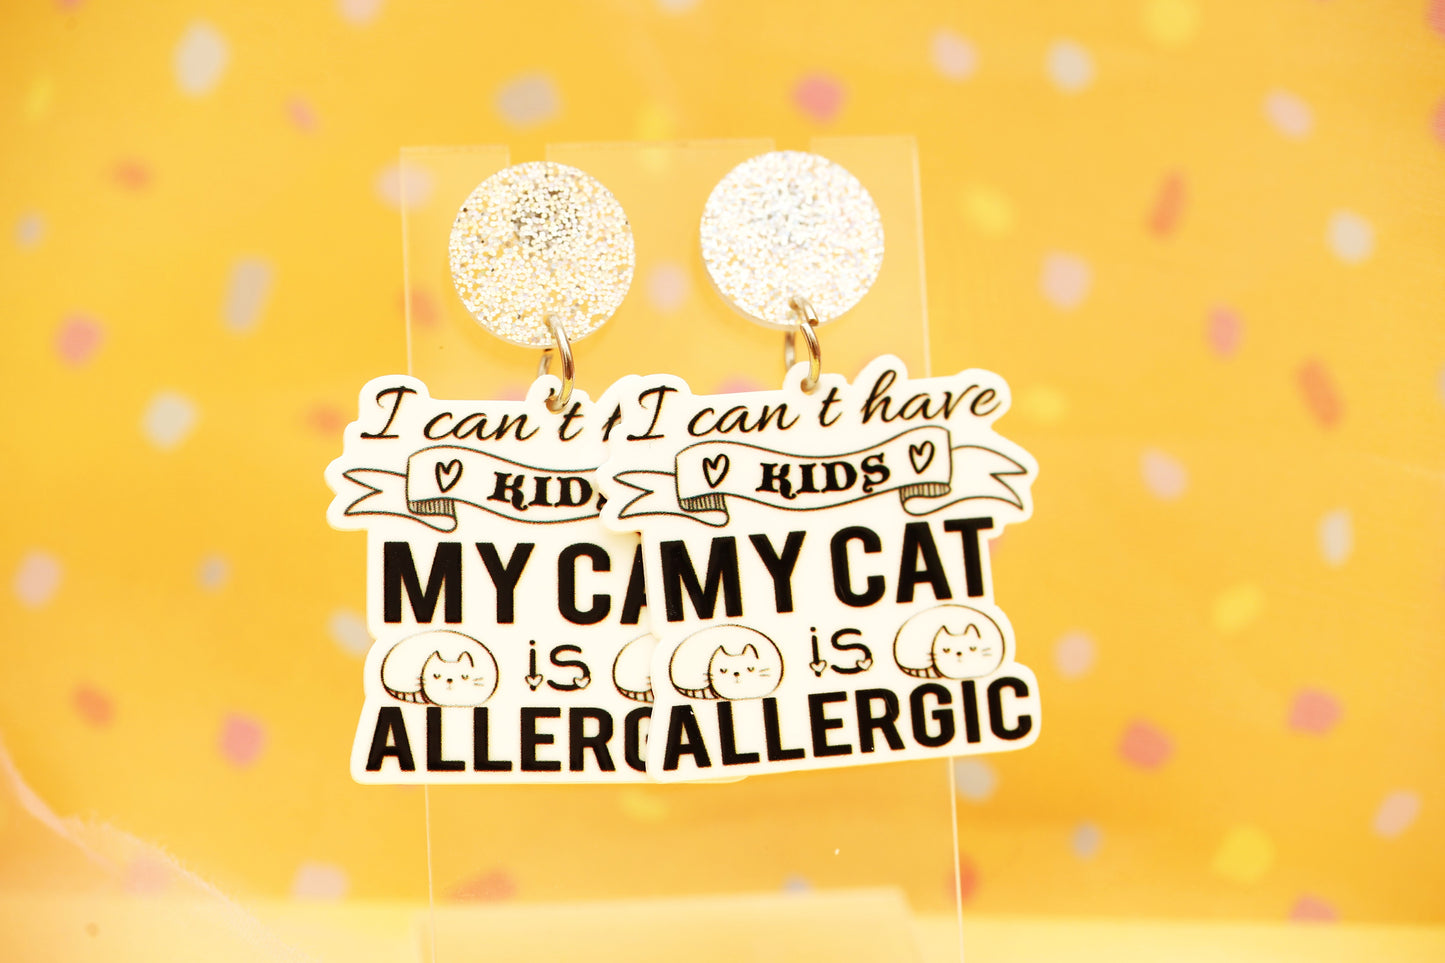 Cat Is Allergic Statement Dangles